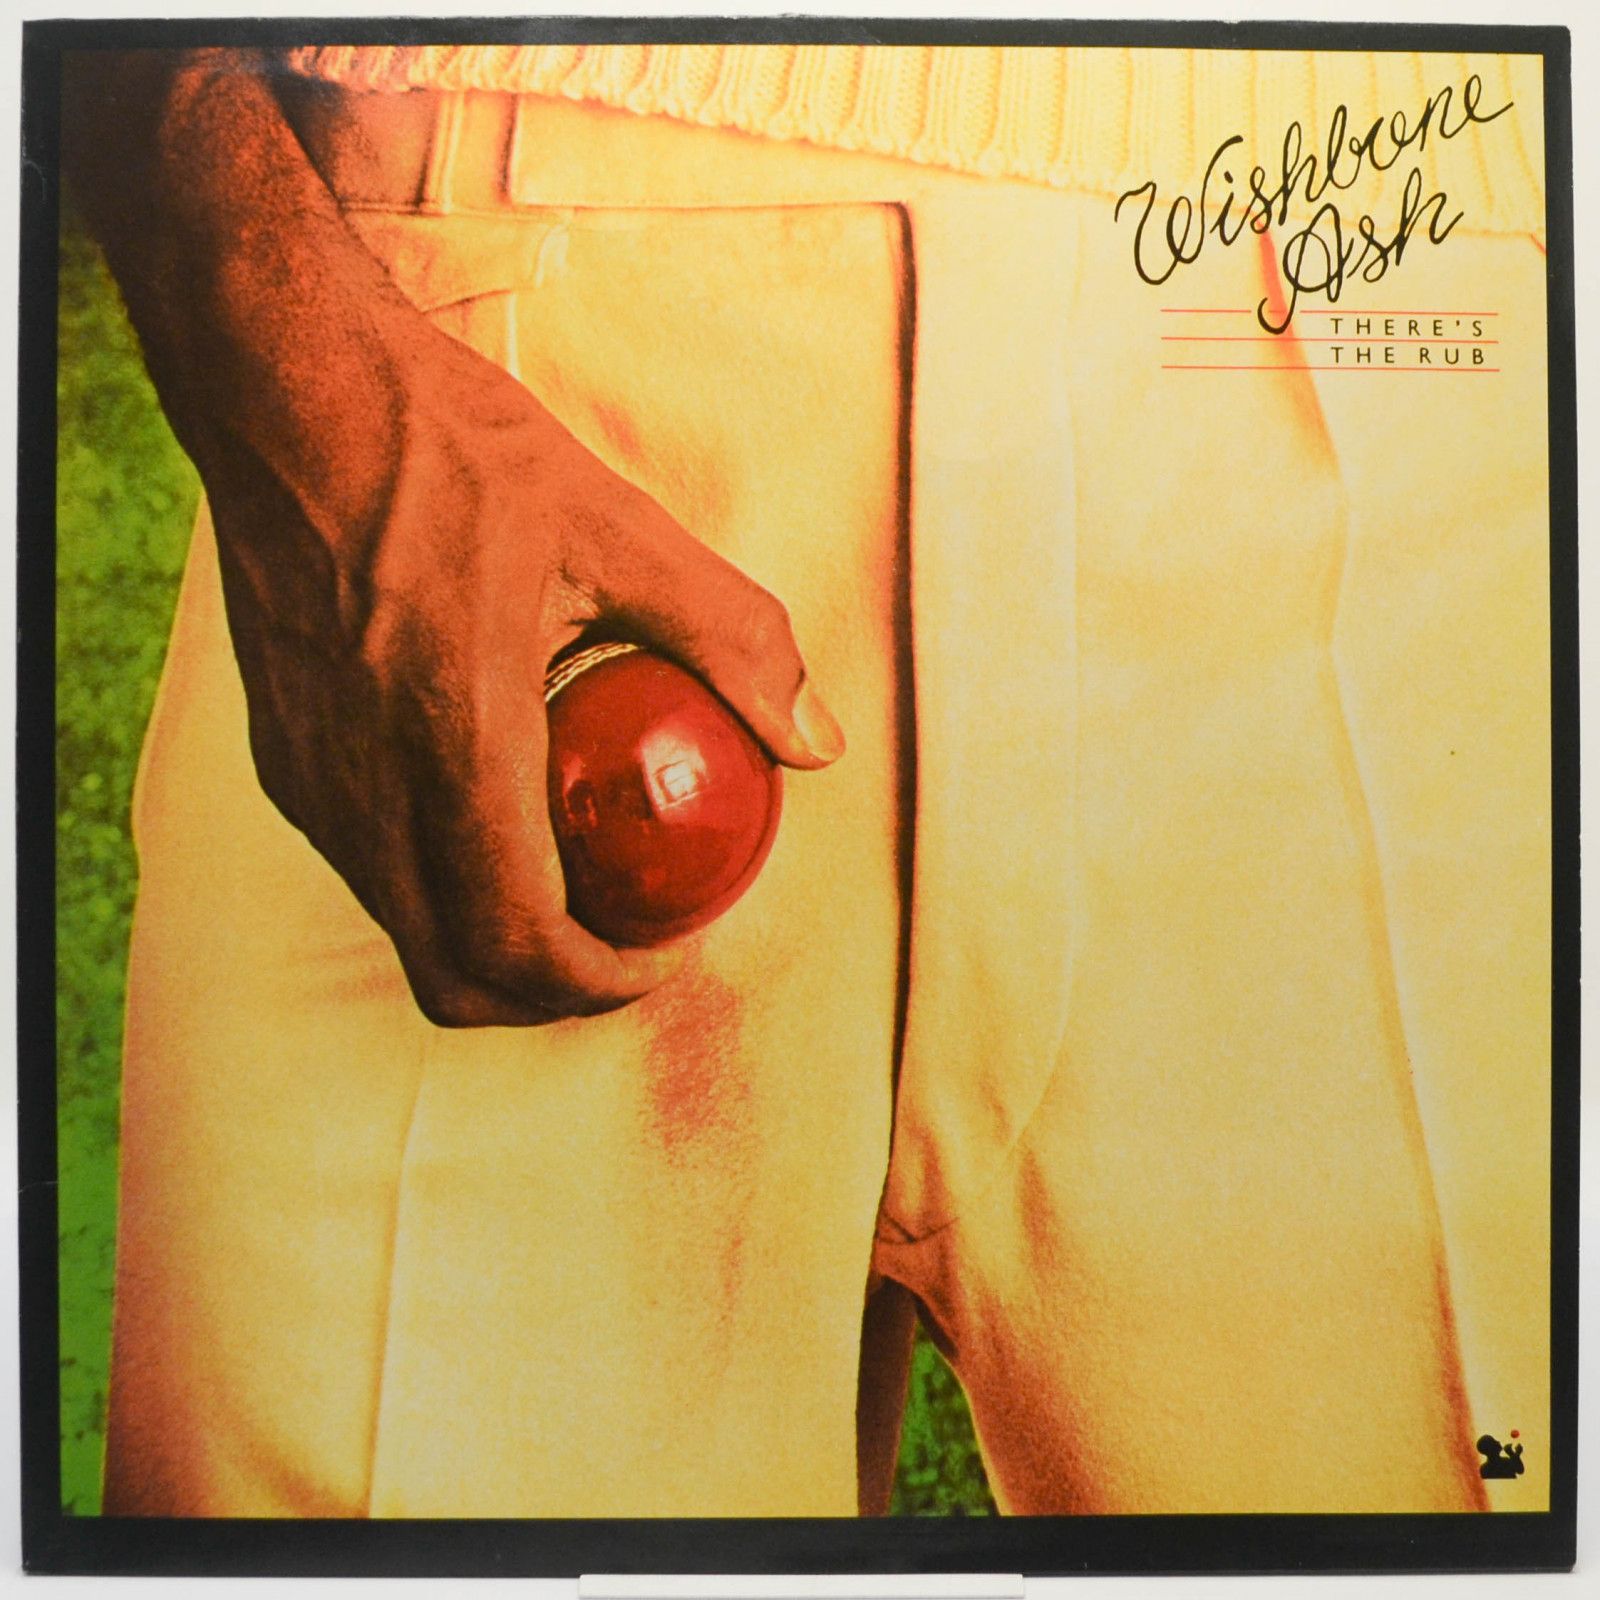 Wishbone Ash — There's The Rub, 1974